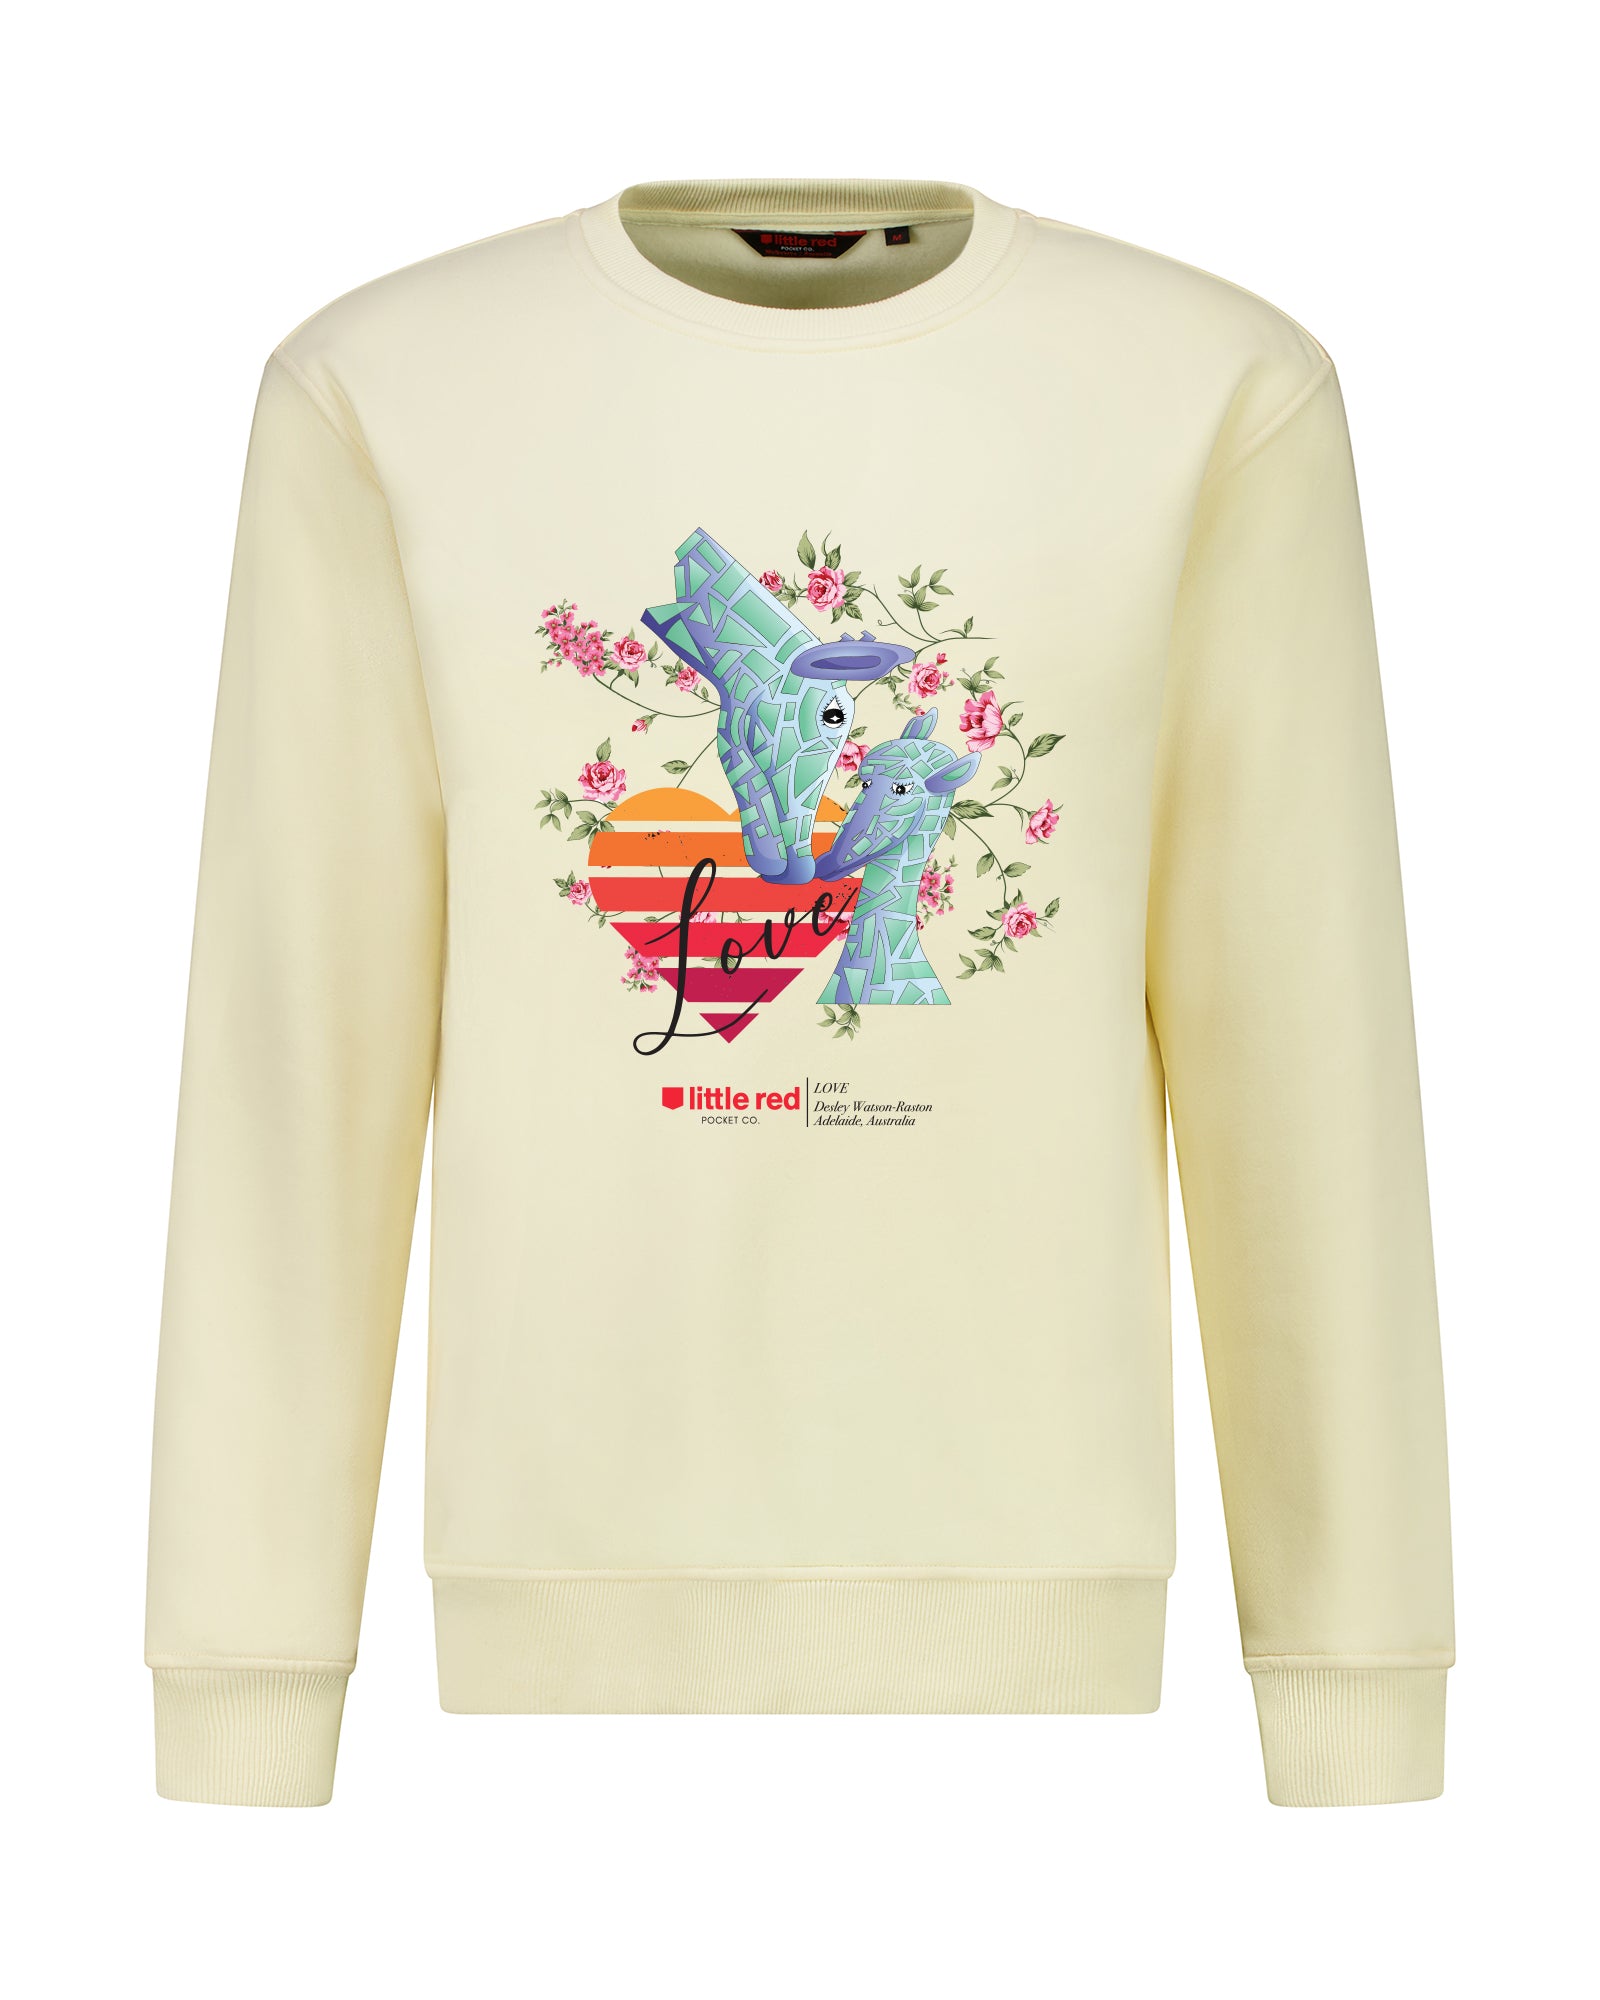 "Love" Crewneck Sweater